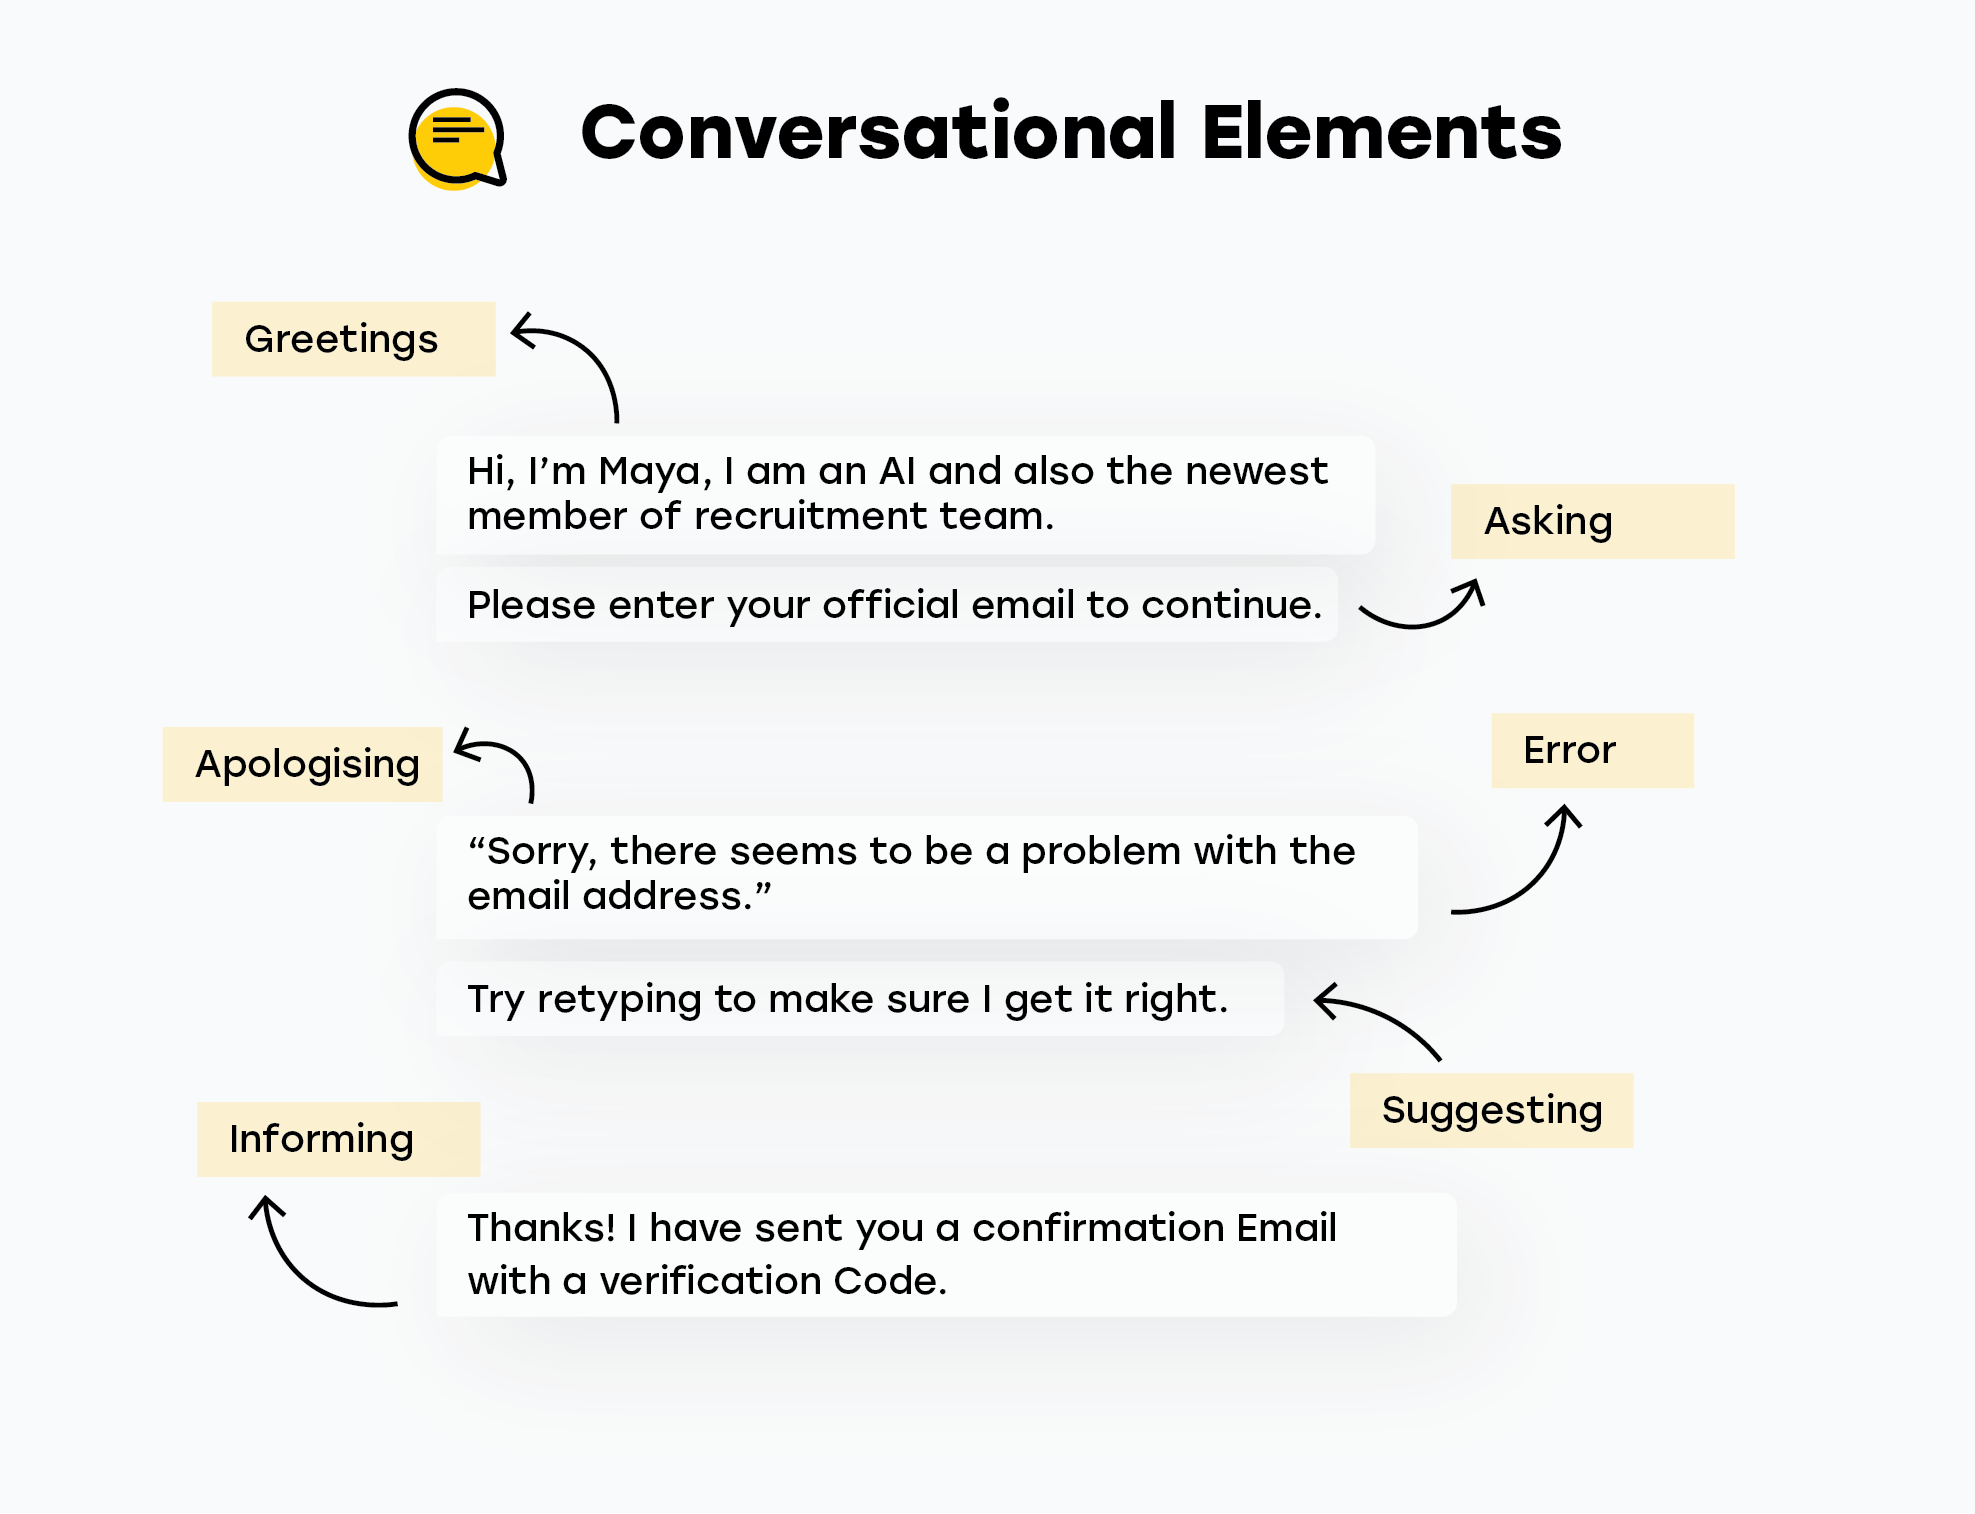 Identifying conversational elements